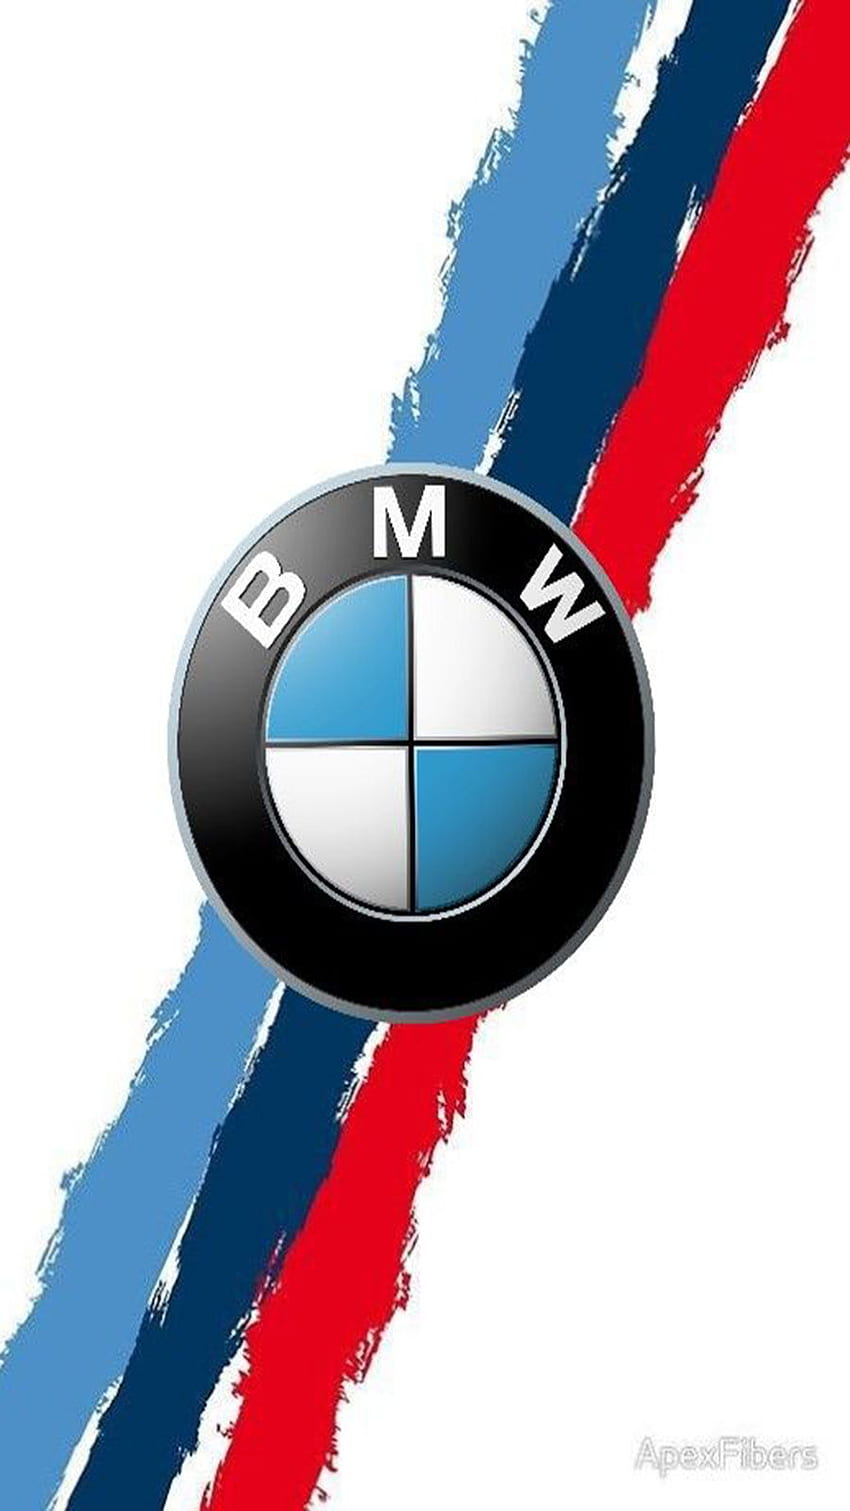 BMW logo  Bmw logo, Bmw iphone wallpaper, Bmw wallpapers